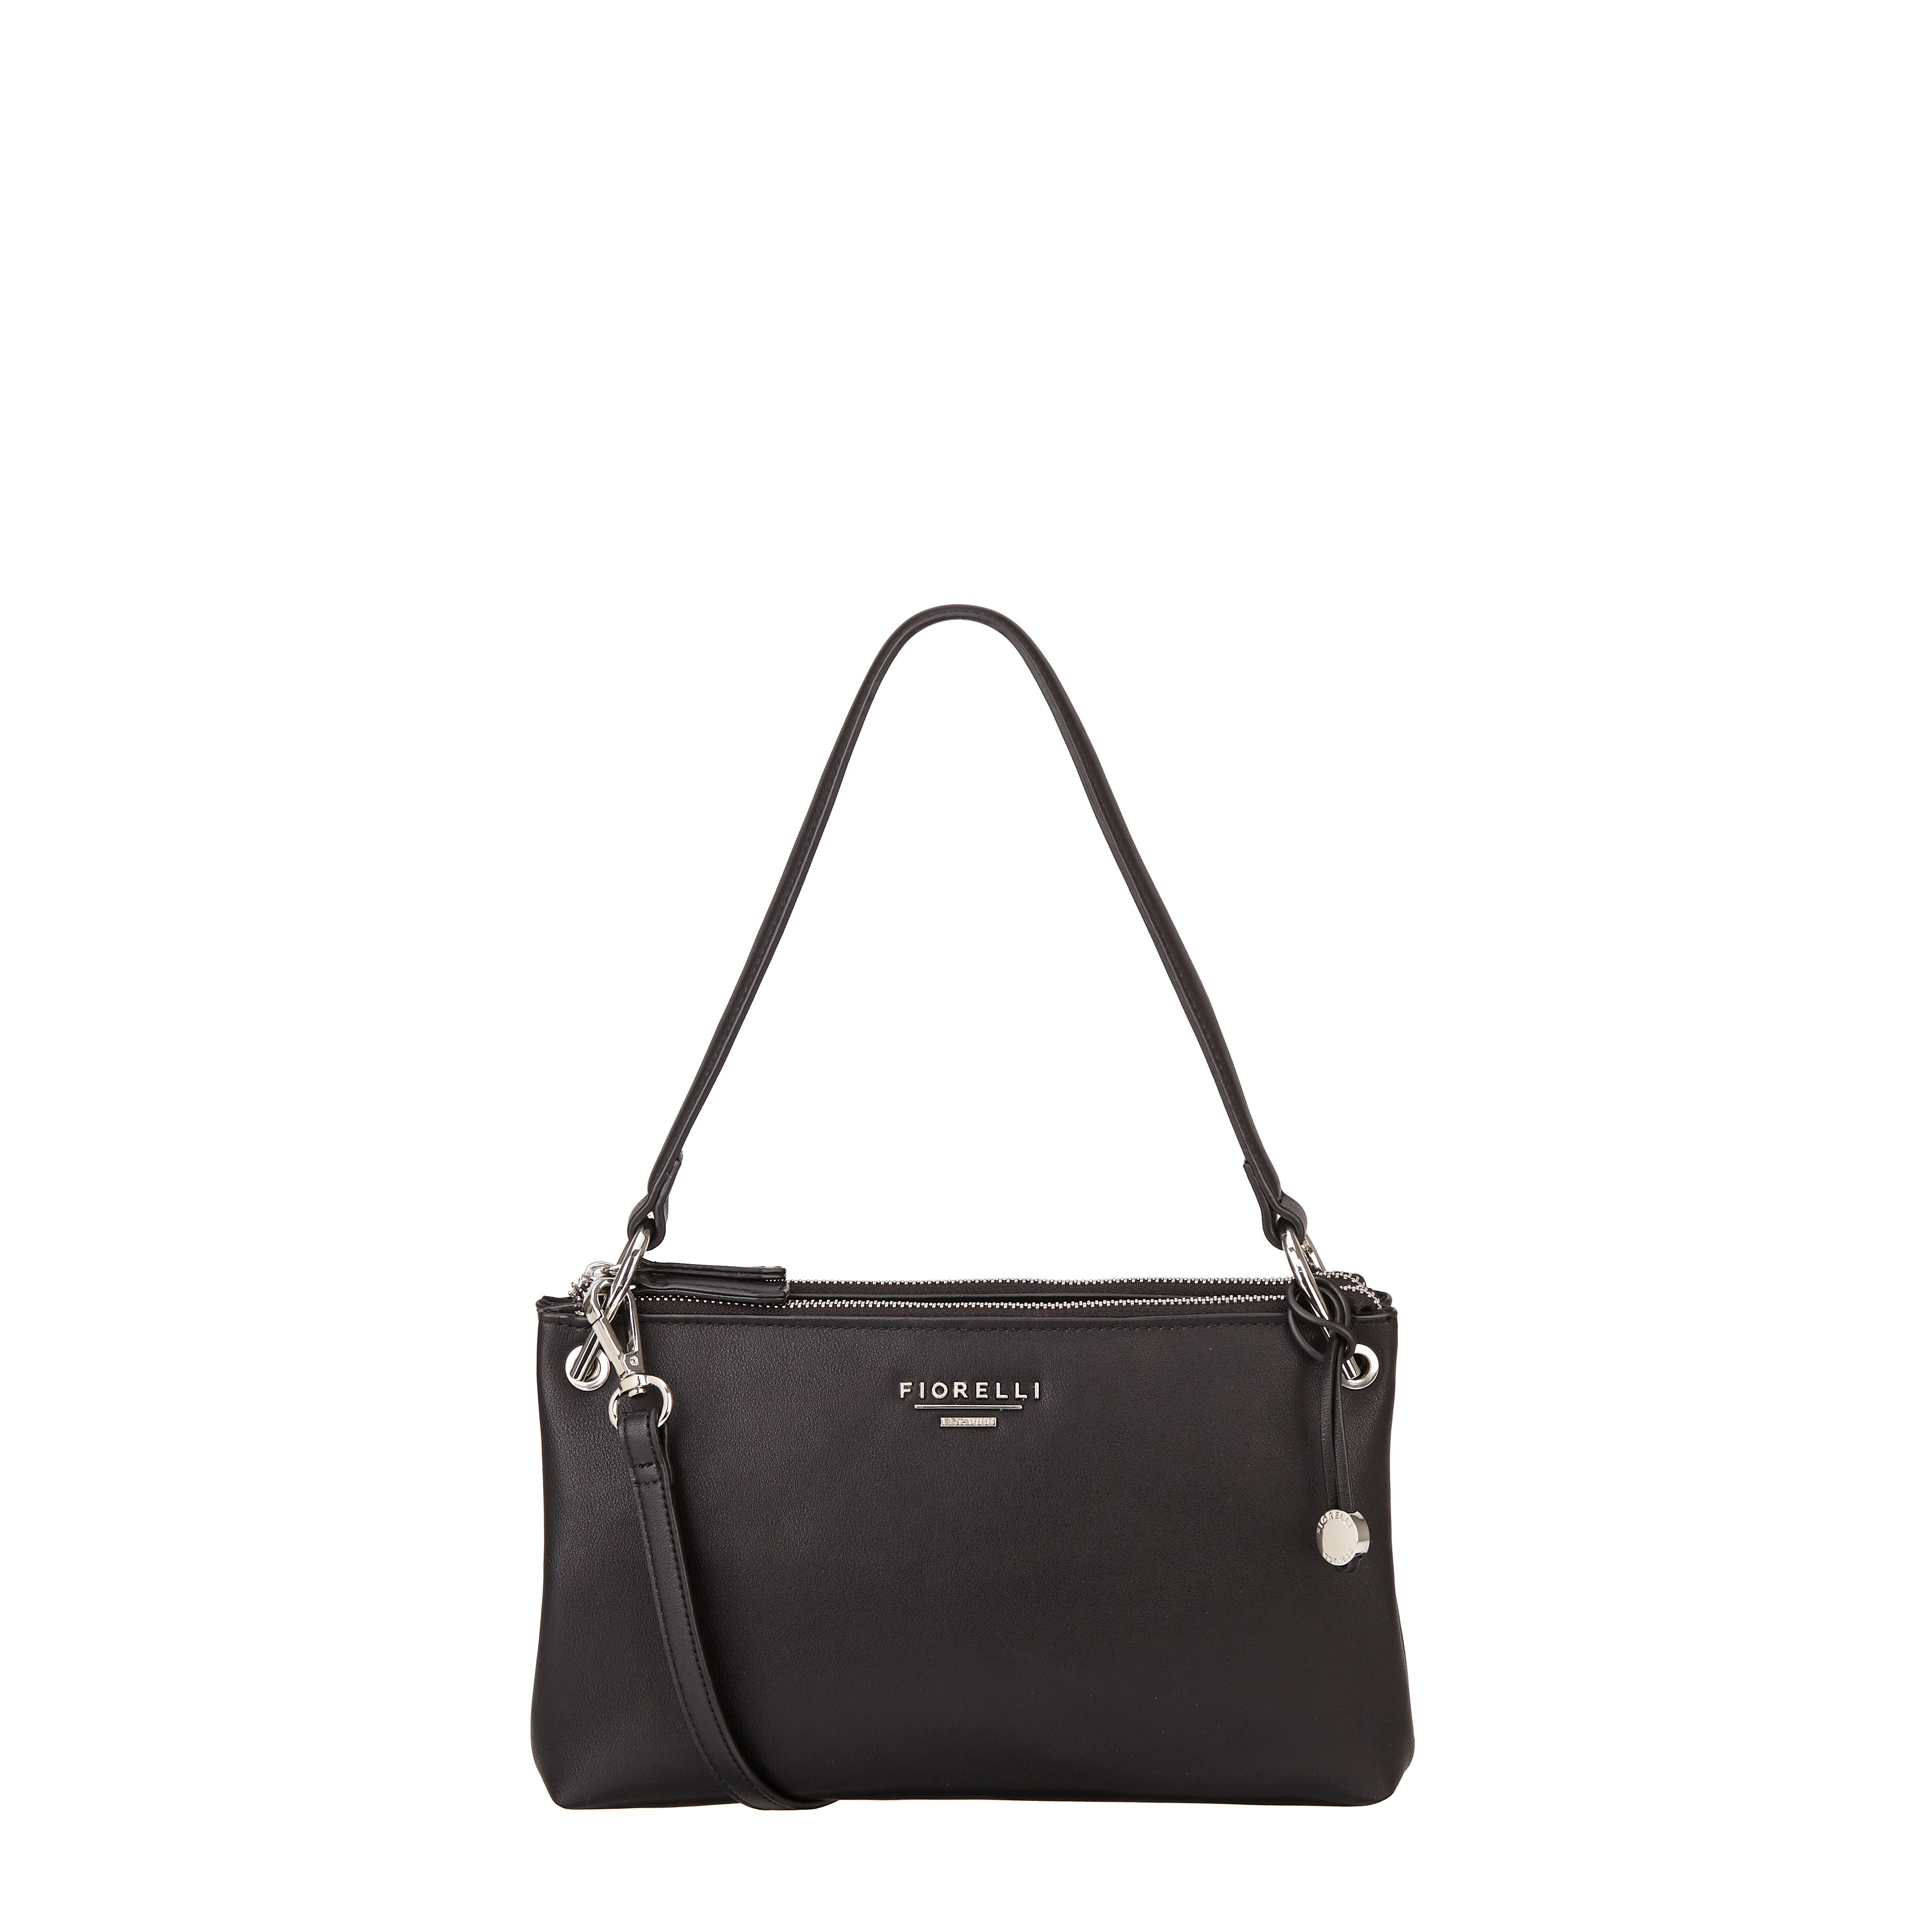 Fiorelli Kayla Black Small Shoulder Bag in Black | Lyst